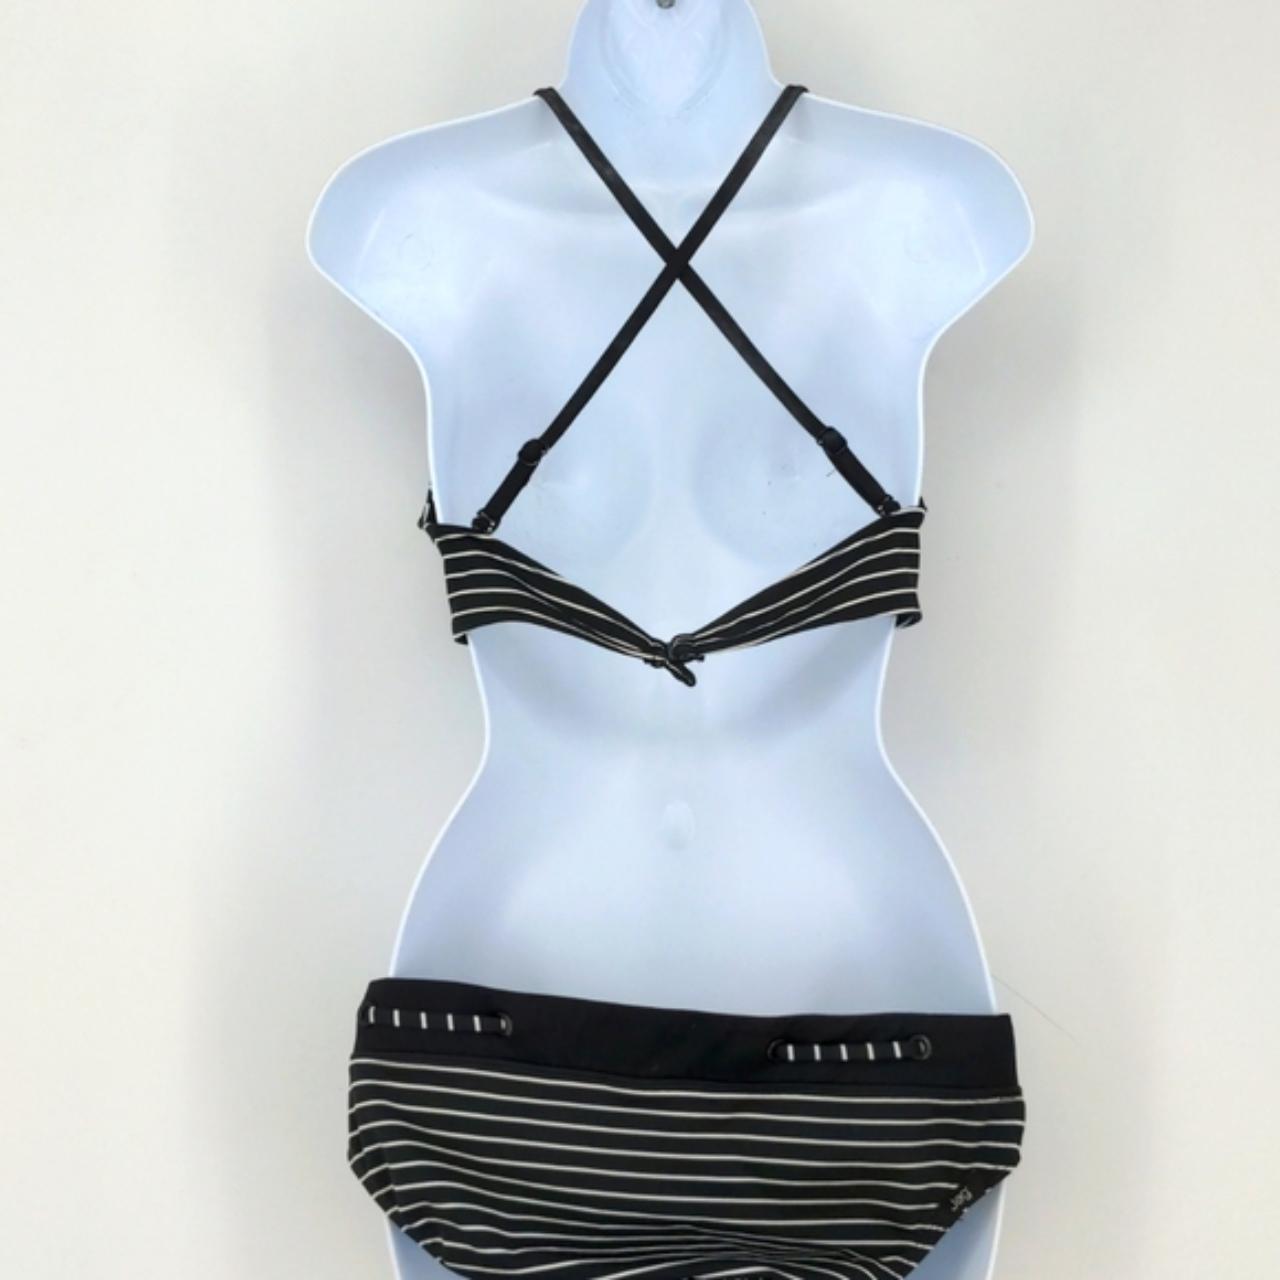 JAG Women's Black and White Bikinis-and-tankini-sets (2)